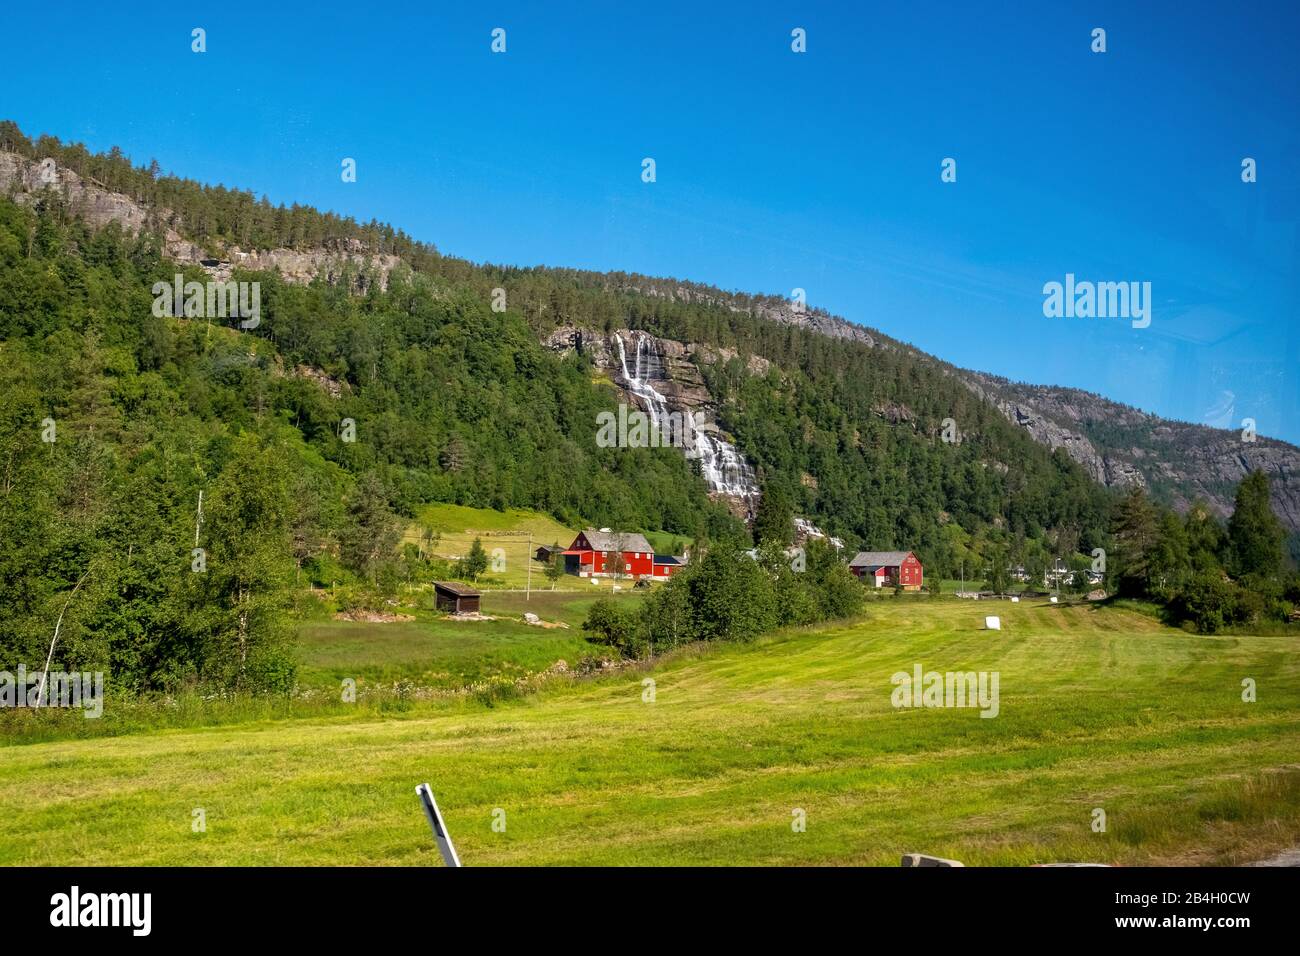 red mountain huts, railway ride with the Flambahn, meadows, trees, waterfall, mountains, blue sky, Skulestadmo, Hordaland, Norway, Scandinavia, Europe Stock Photo